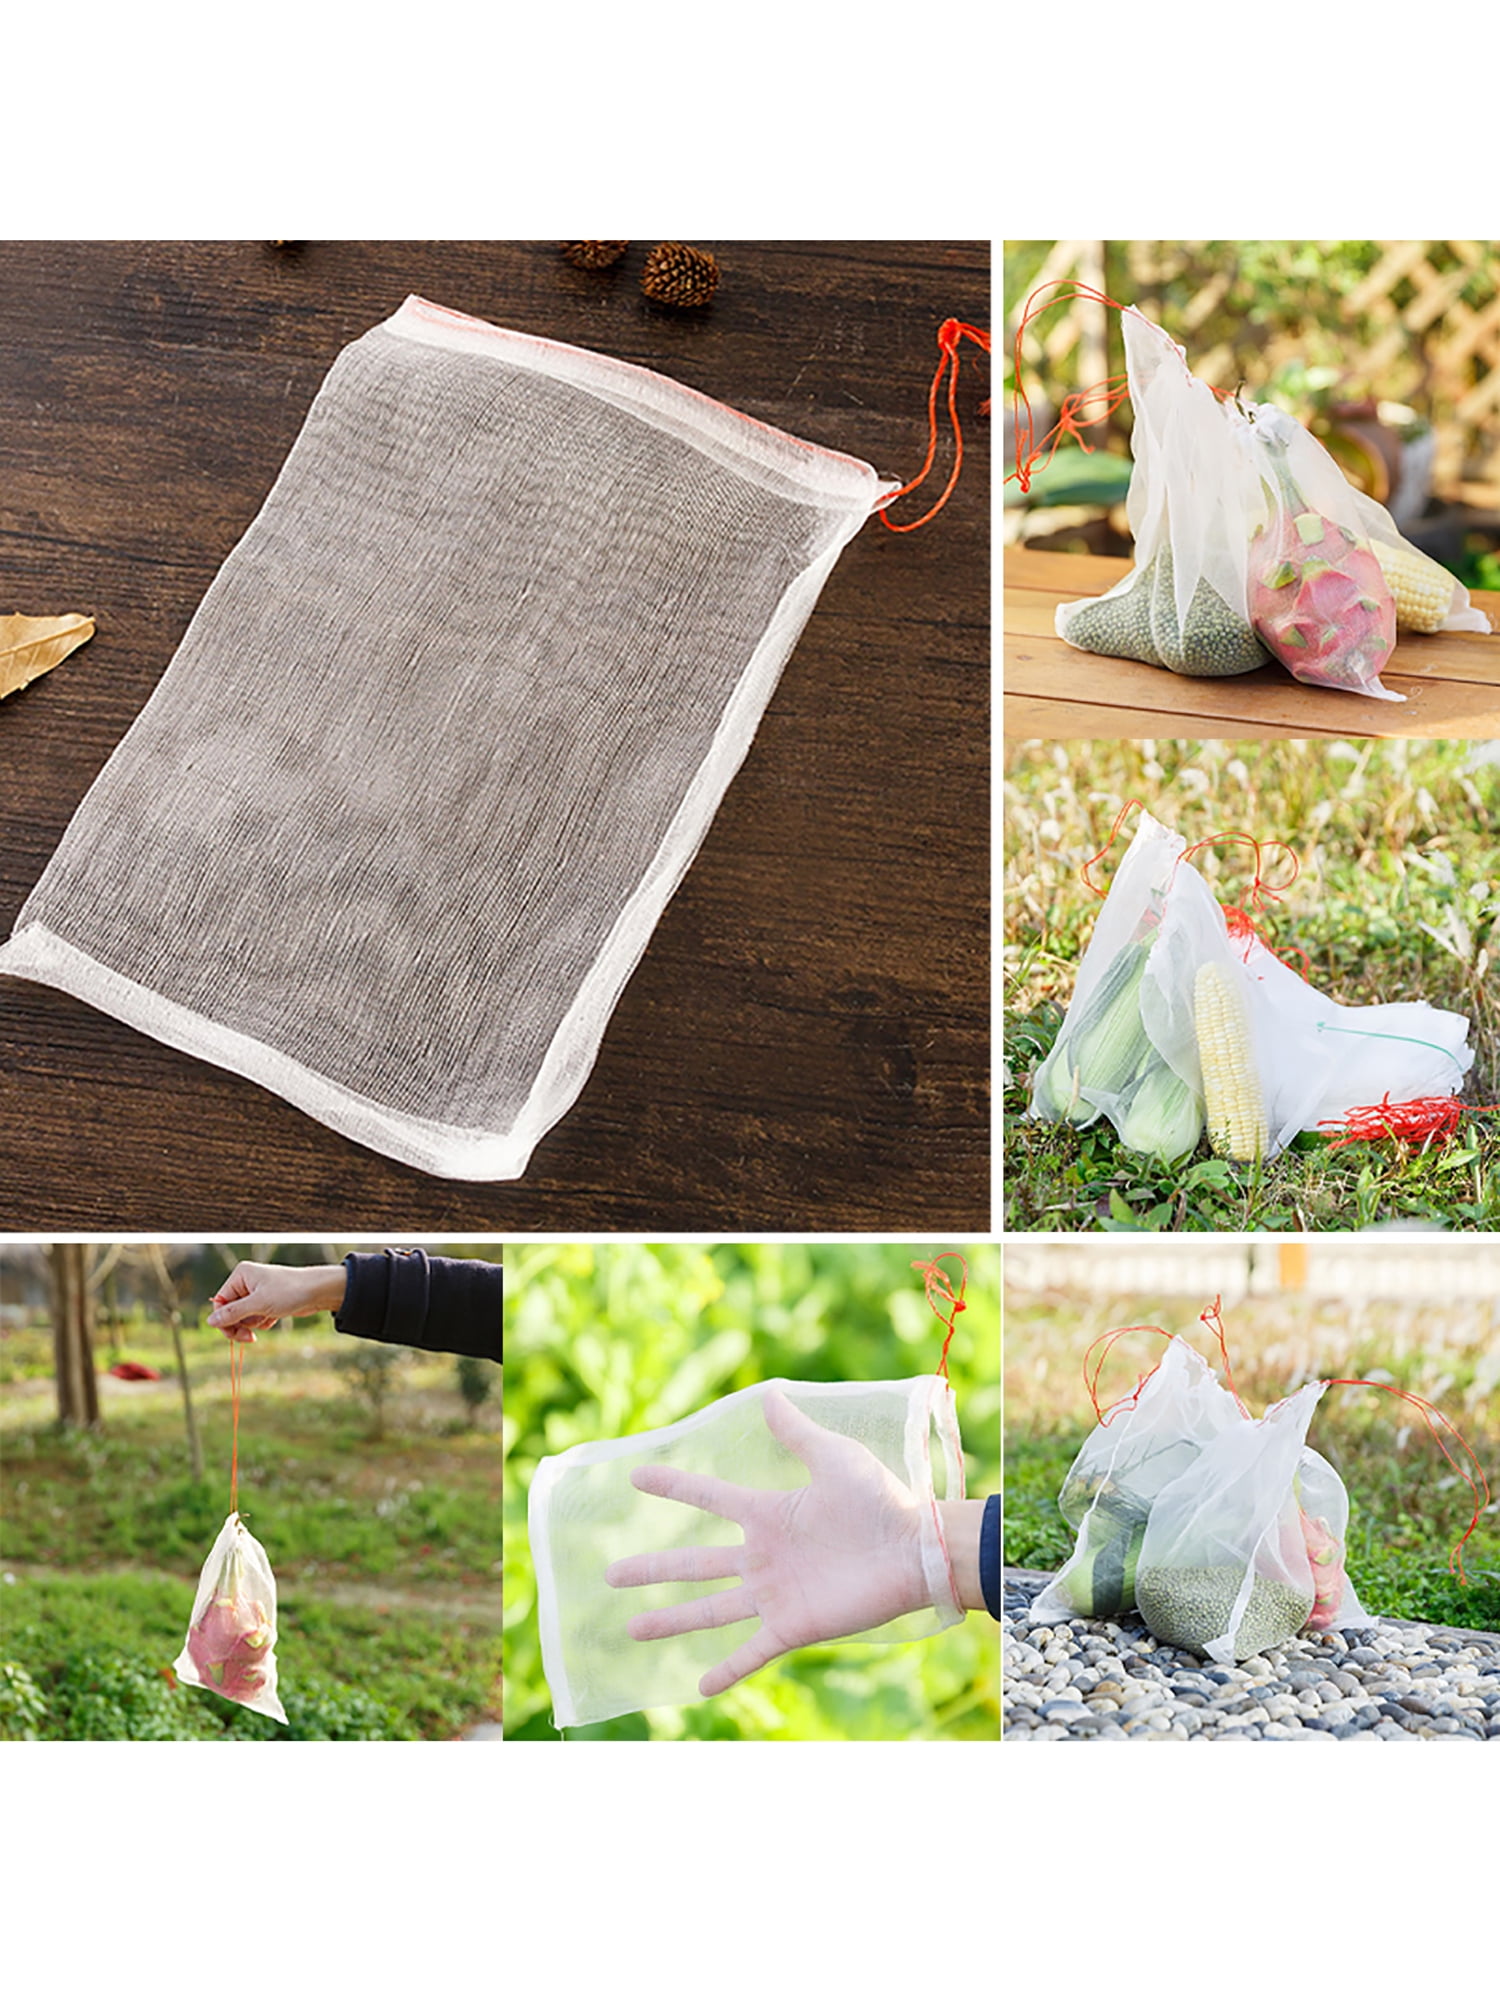 50/100pcs Garden Plant Fruit Protect Drawstring Net Bag Against Insect Pest Bird